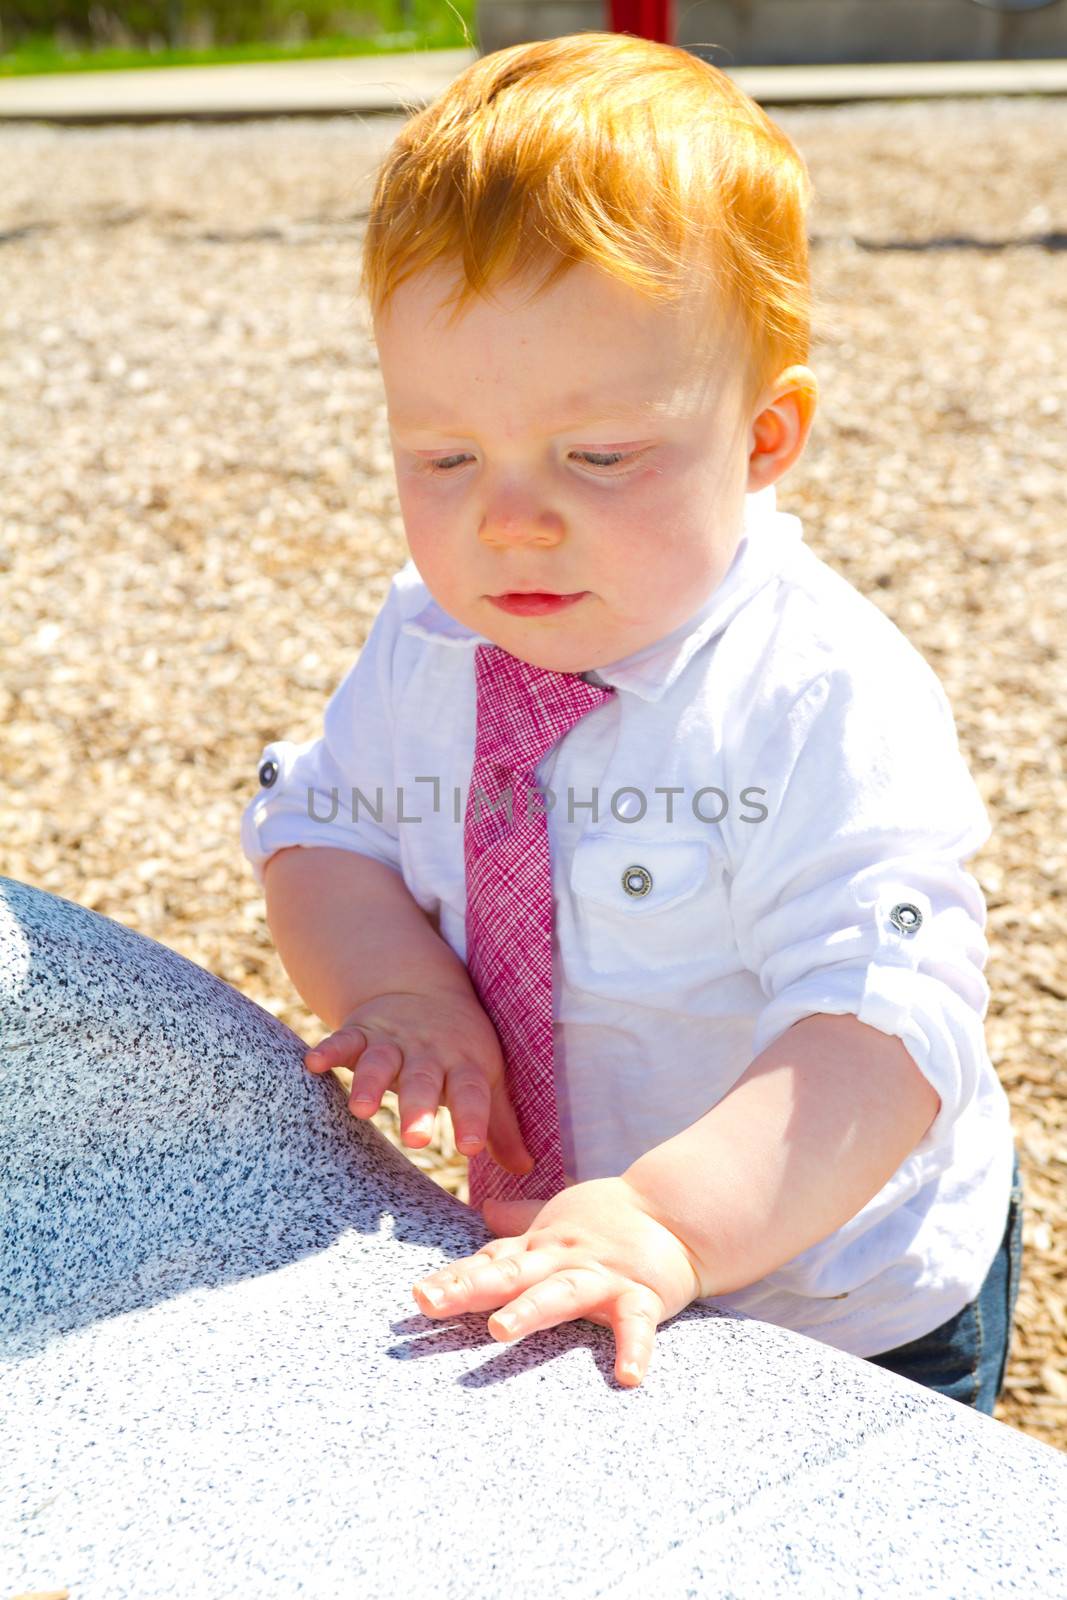 Baby Boy at Playground by joshuaraineyphotography